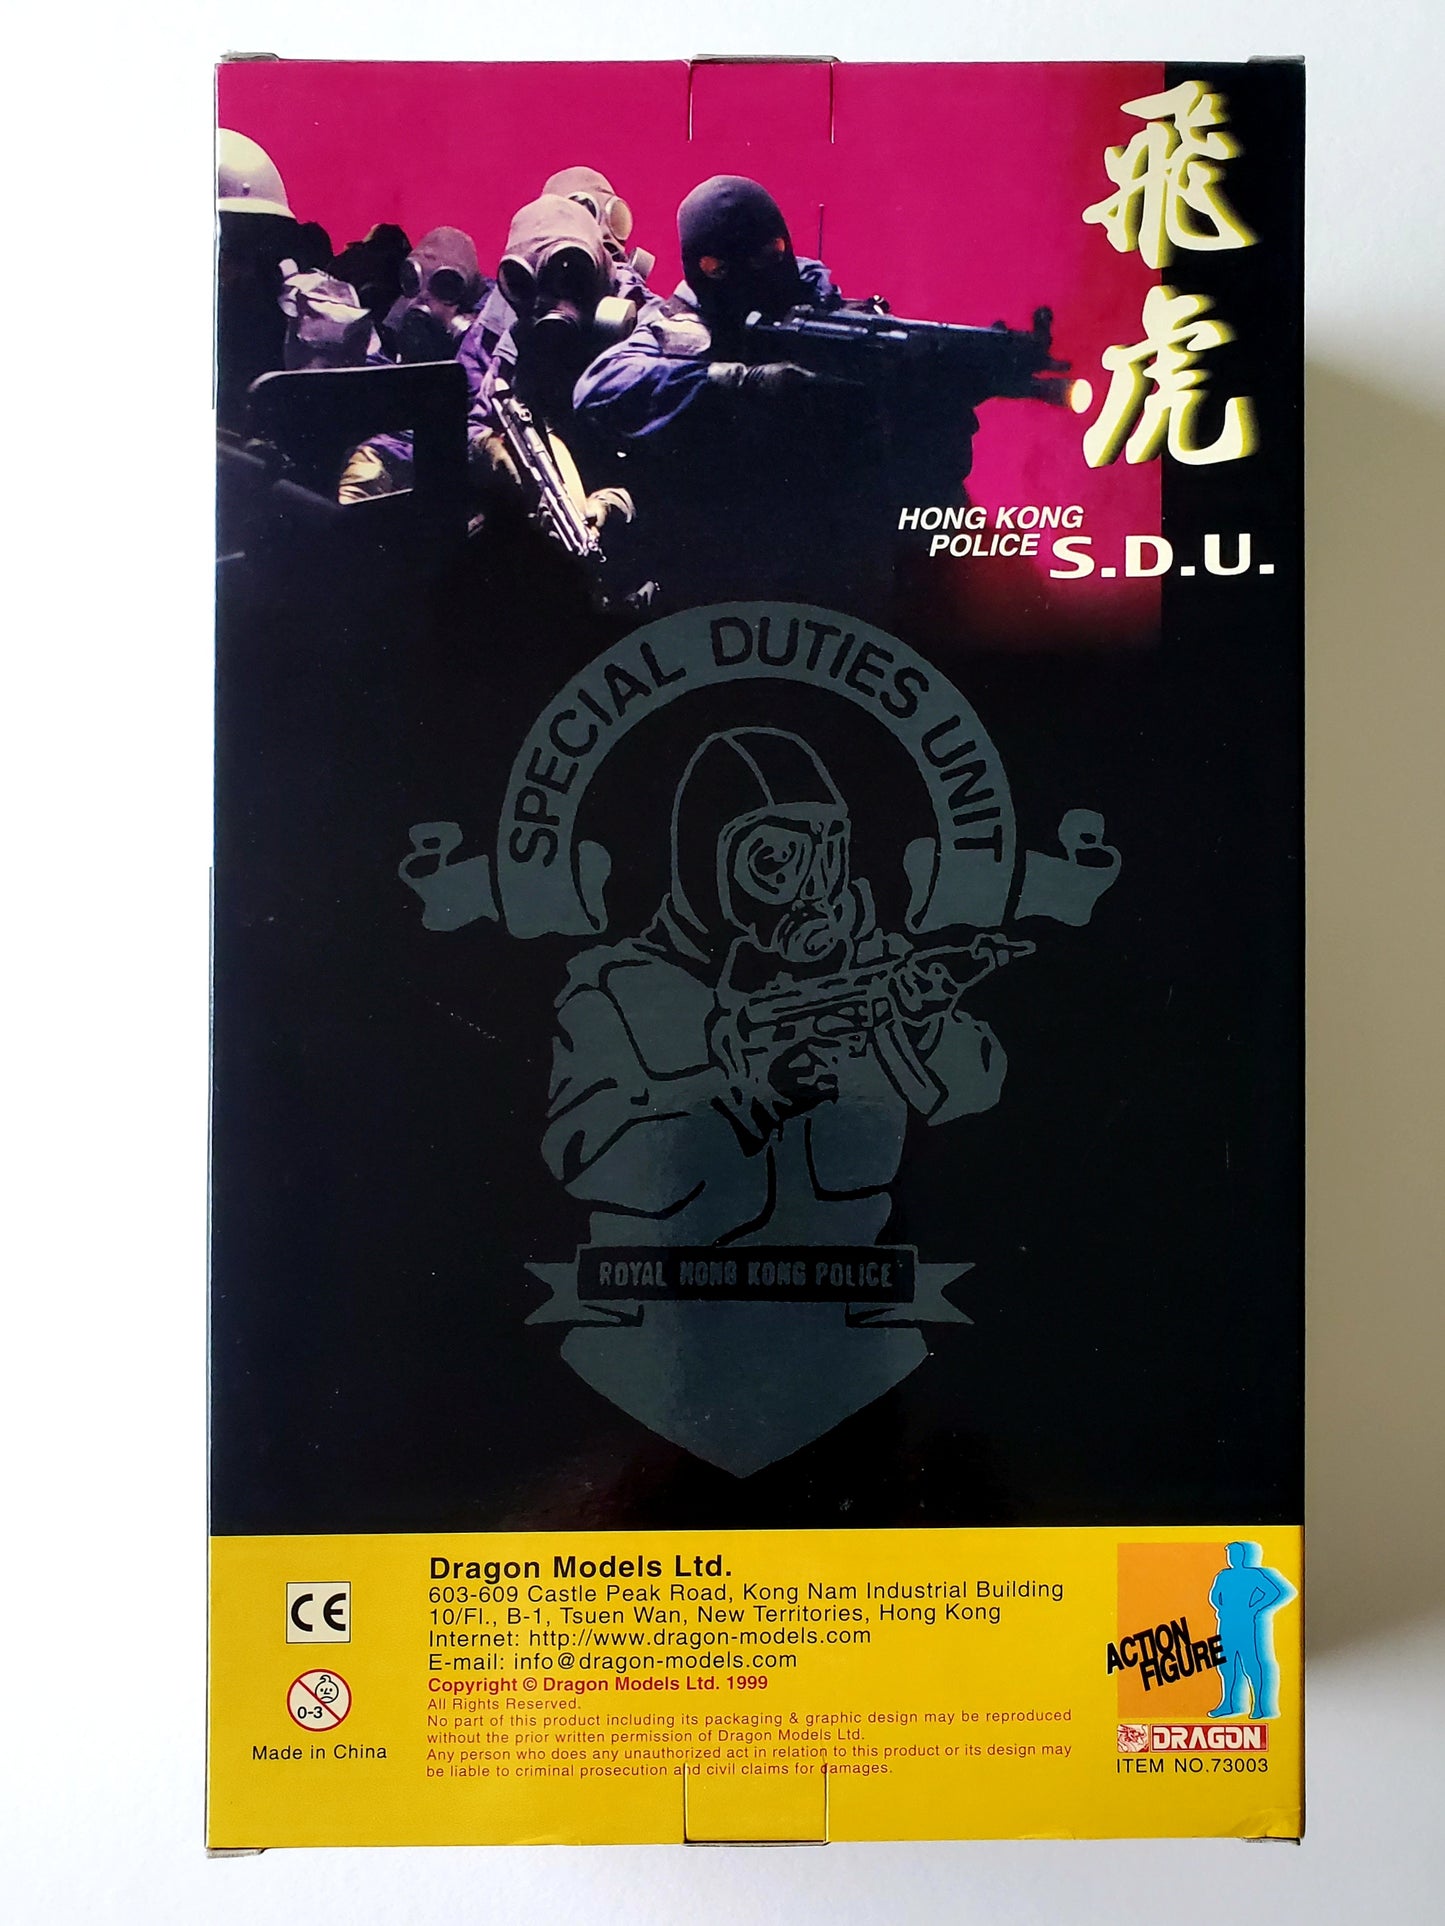 Dragon Hong Kong Police S.D.U. (Special Duties Unit) "Michael Chan" 12-Inch Action Figure